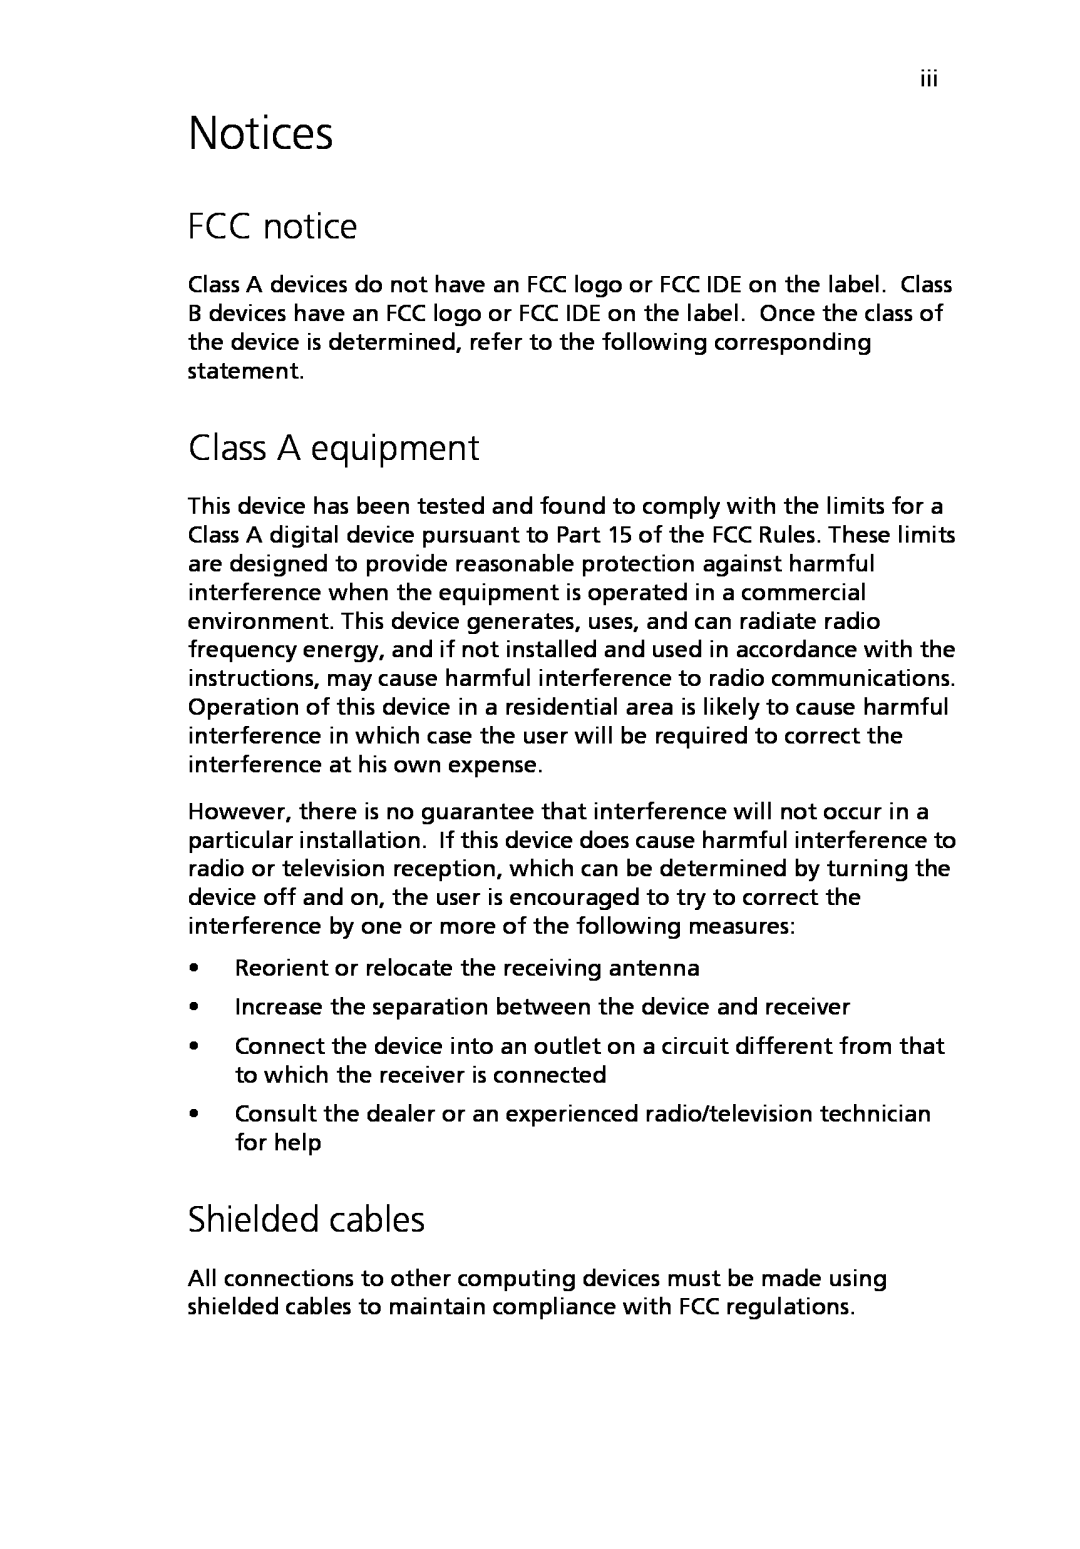 Acer Altos R710 manual Notices, FCC notice, Class A equipment, Shielded cables 